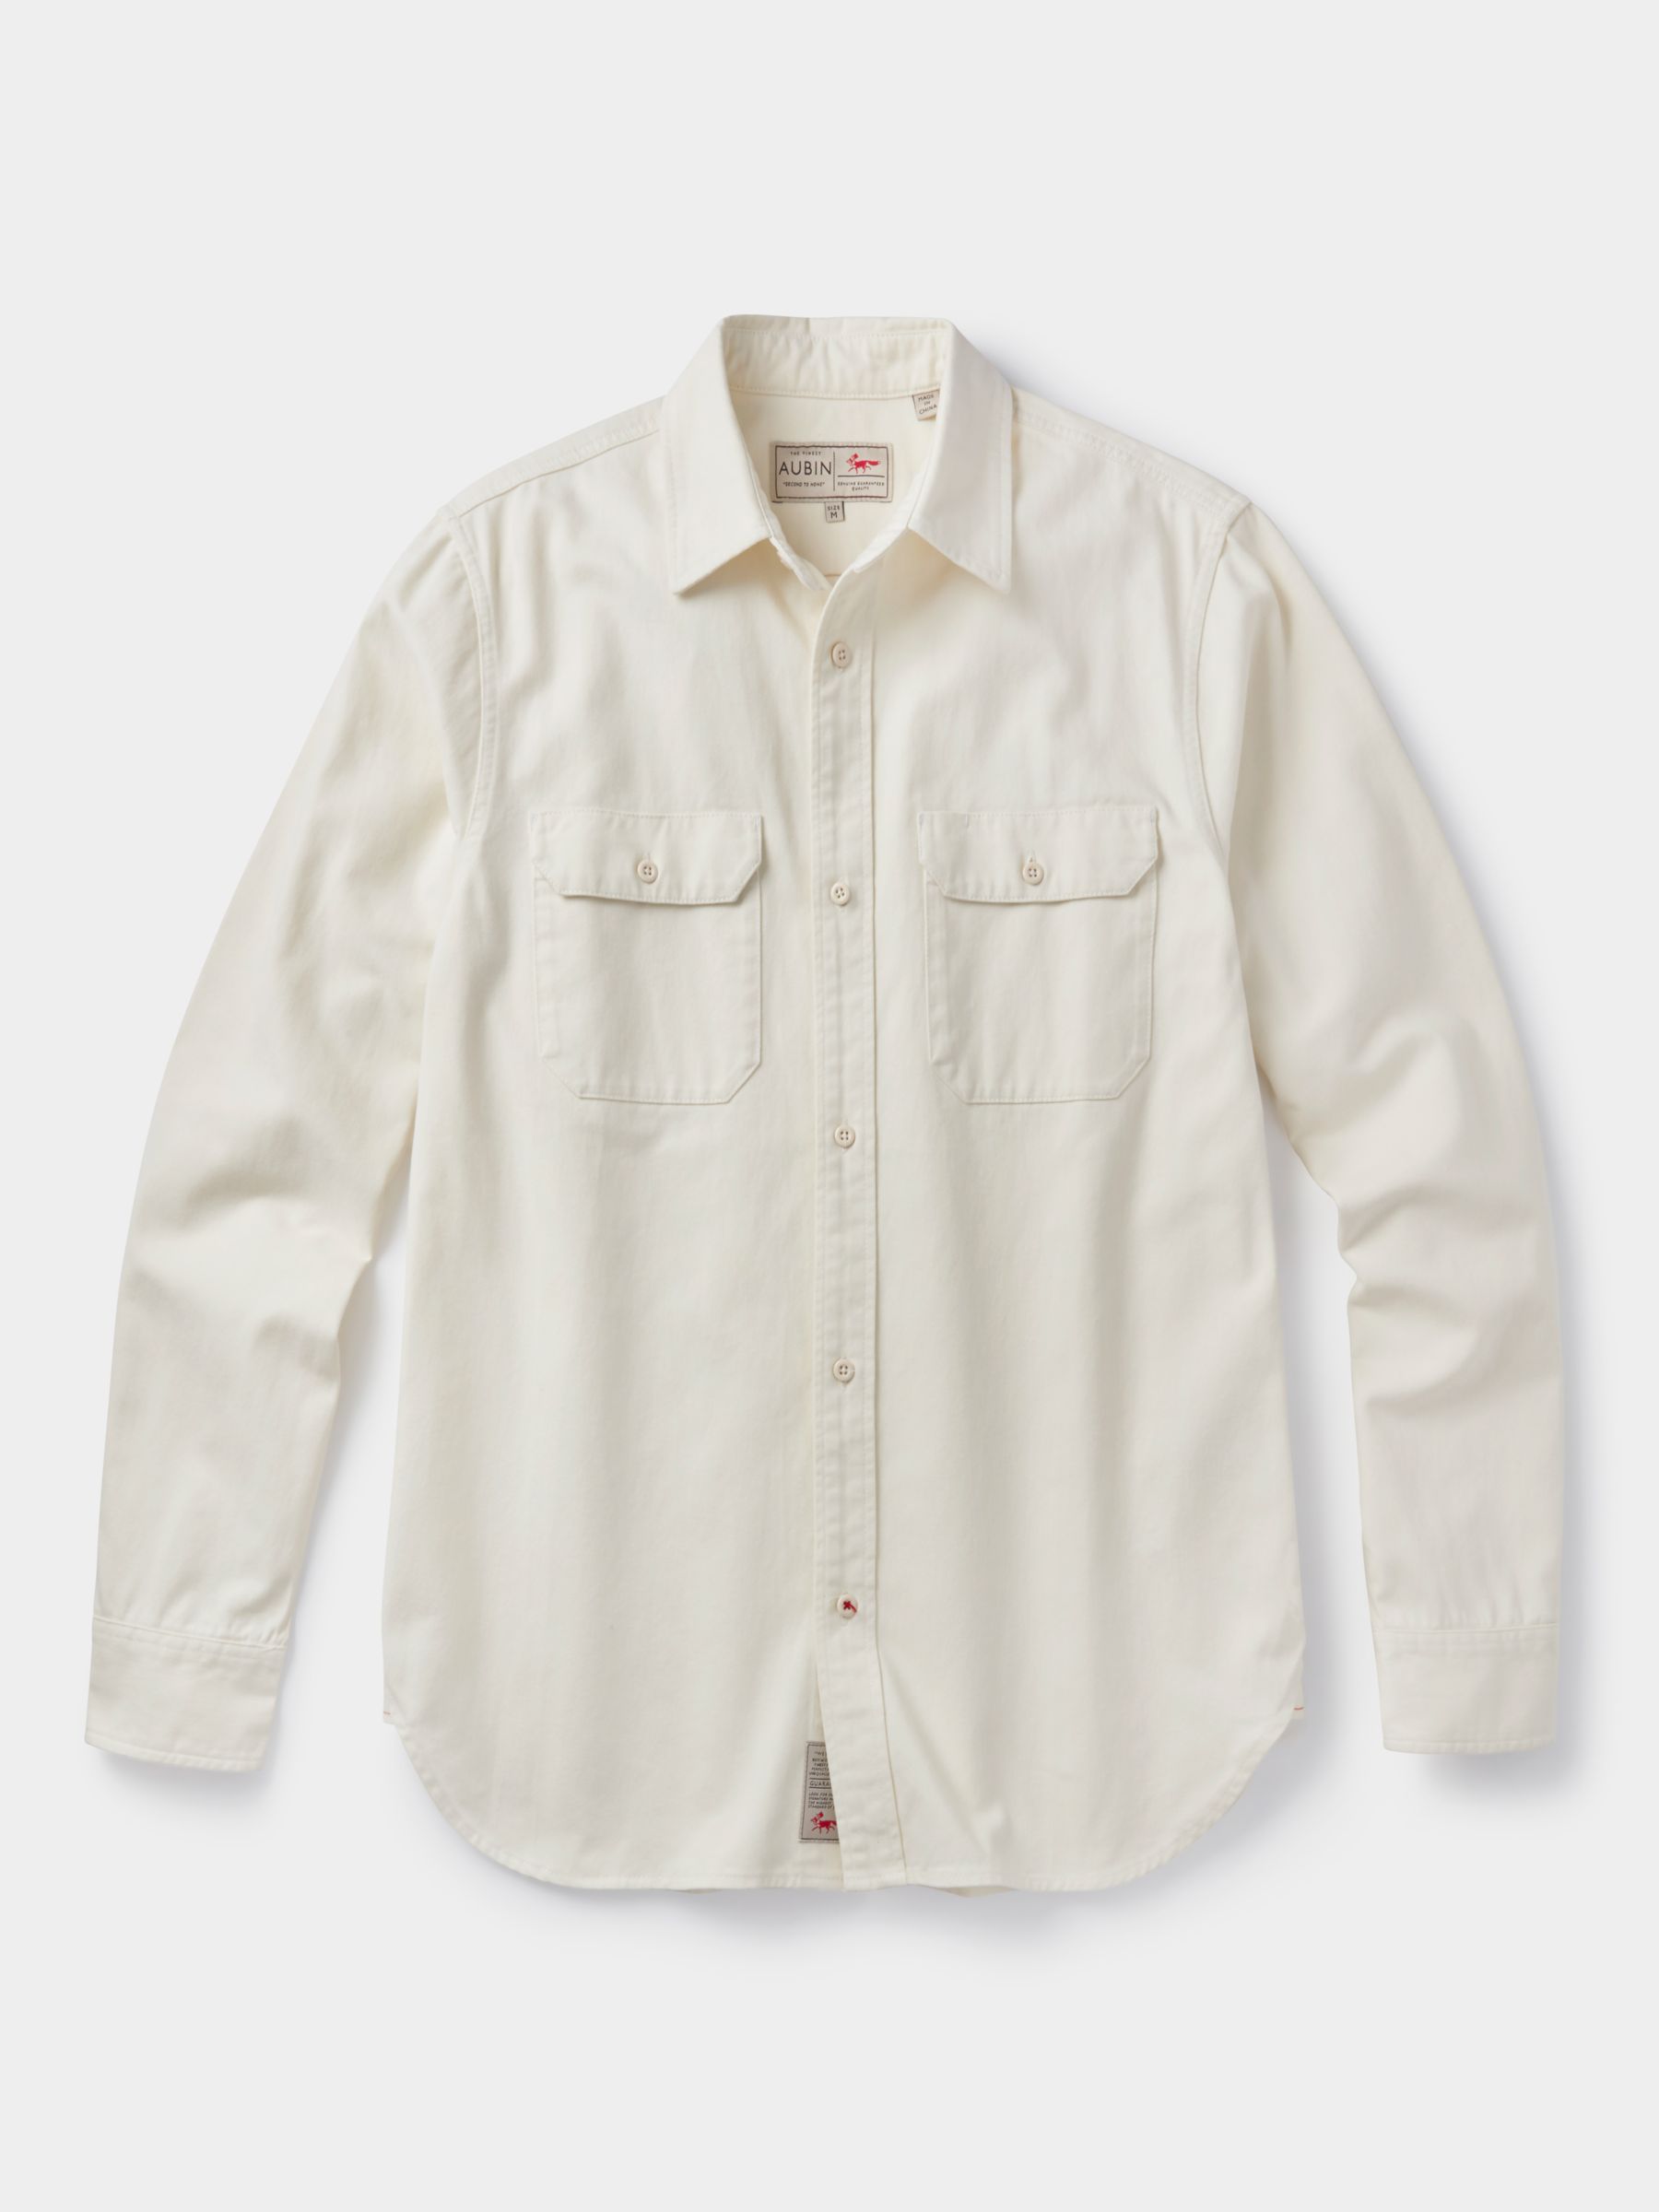 Buy Aubin Normanby Cotton Twill Shirt Online at johnlewis.com